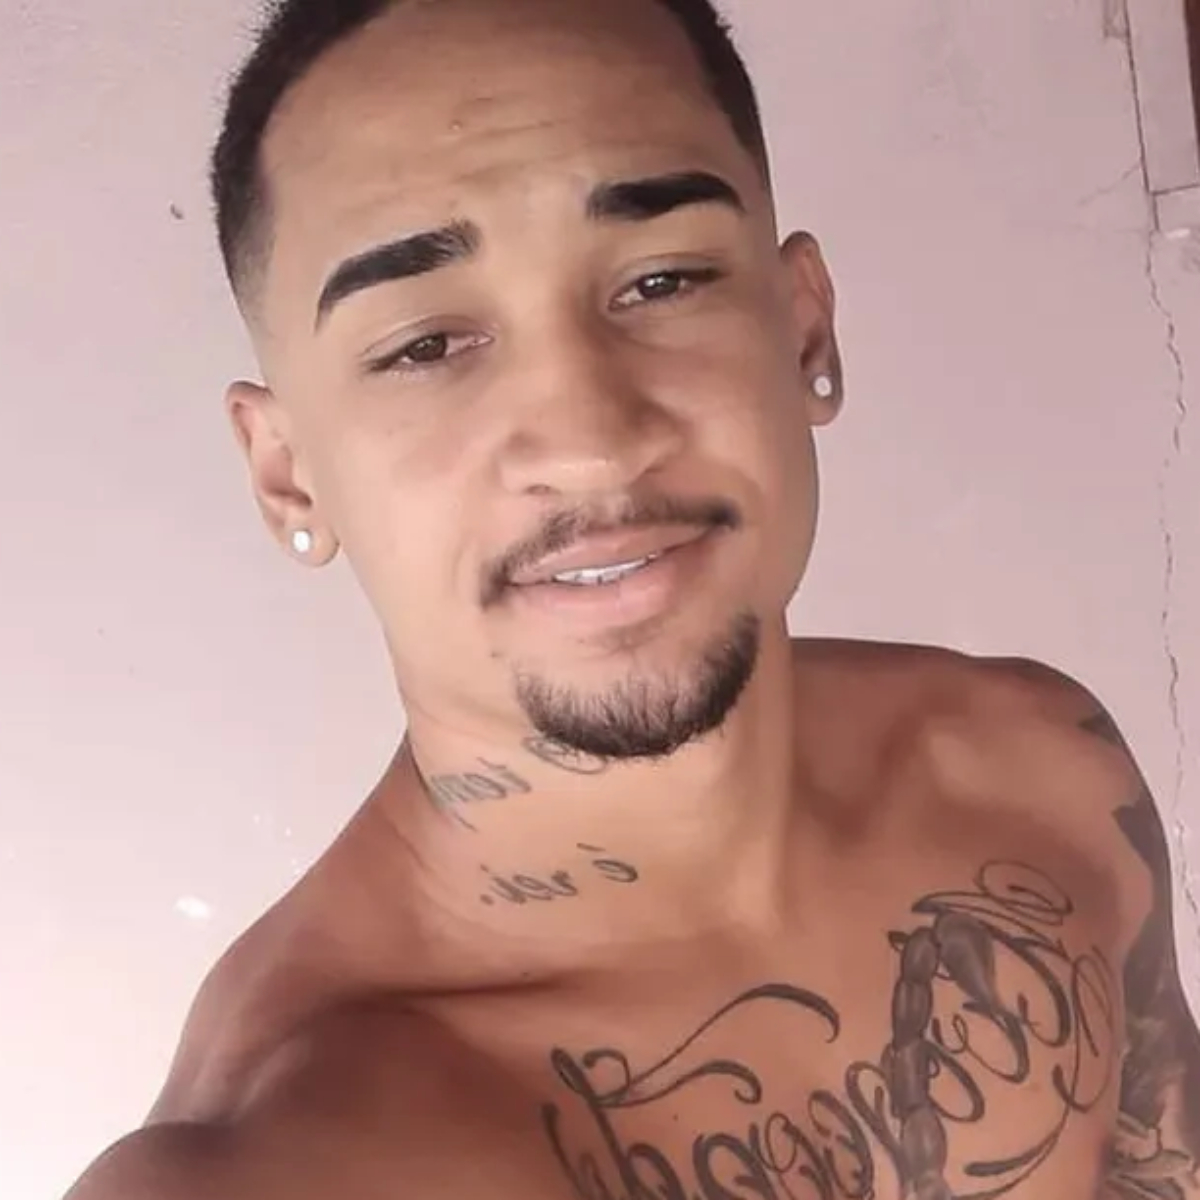  Ronaldo Augusto Souza Alves de Amorim 